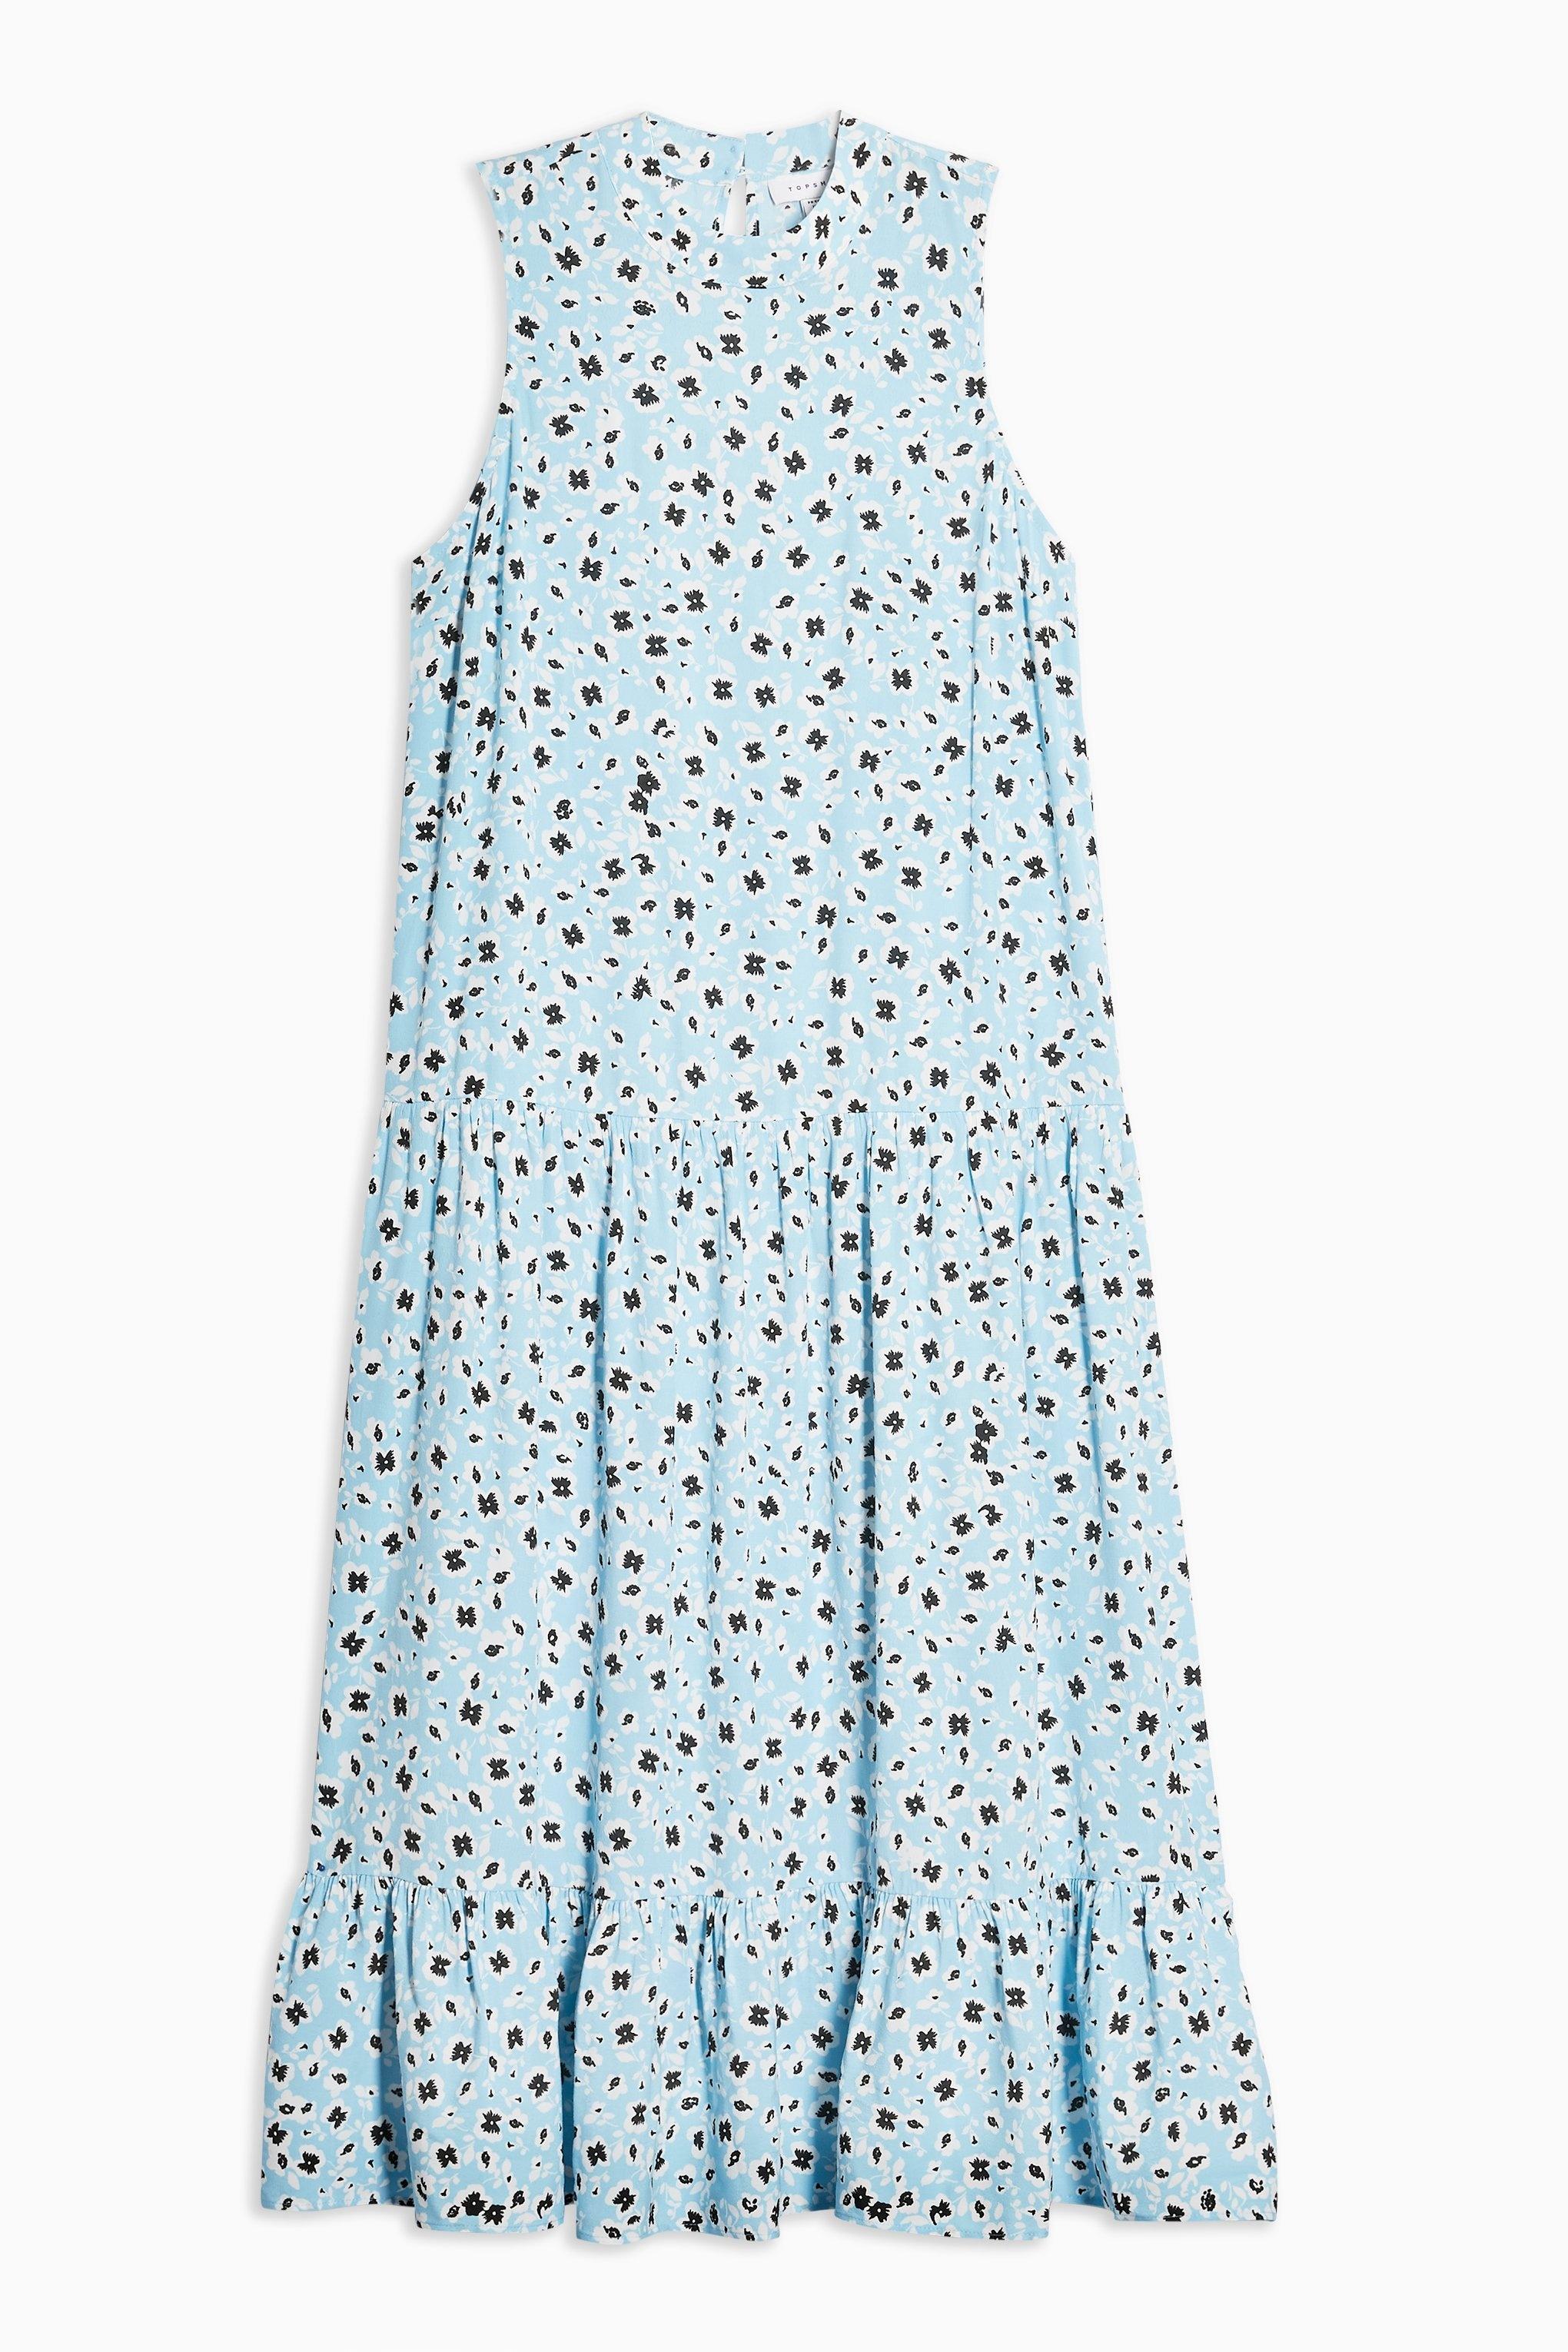 topshop blue floral sleeveless dress